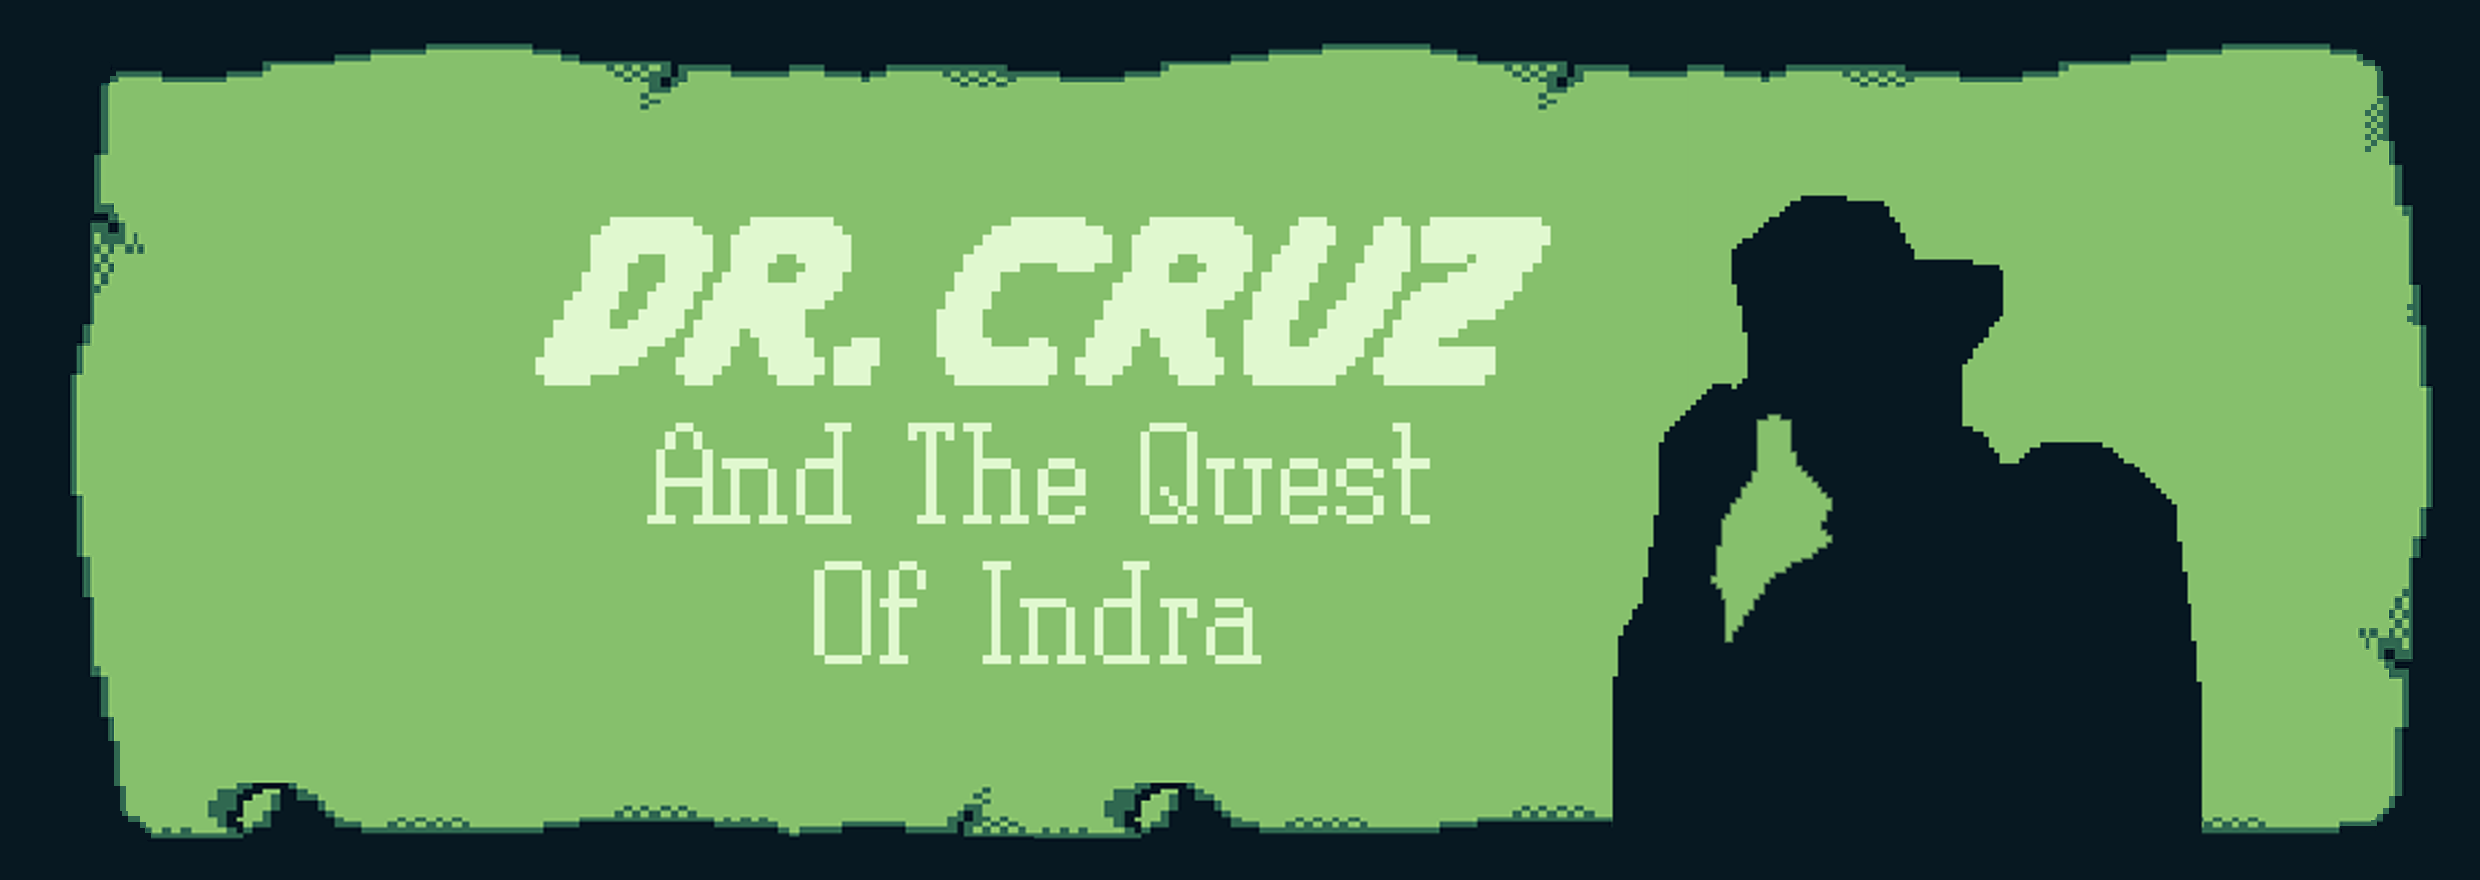 Dr. Cruz and the Quest of Indra (GB Studio - Prototype)